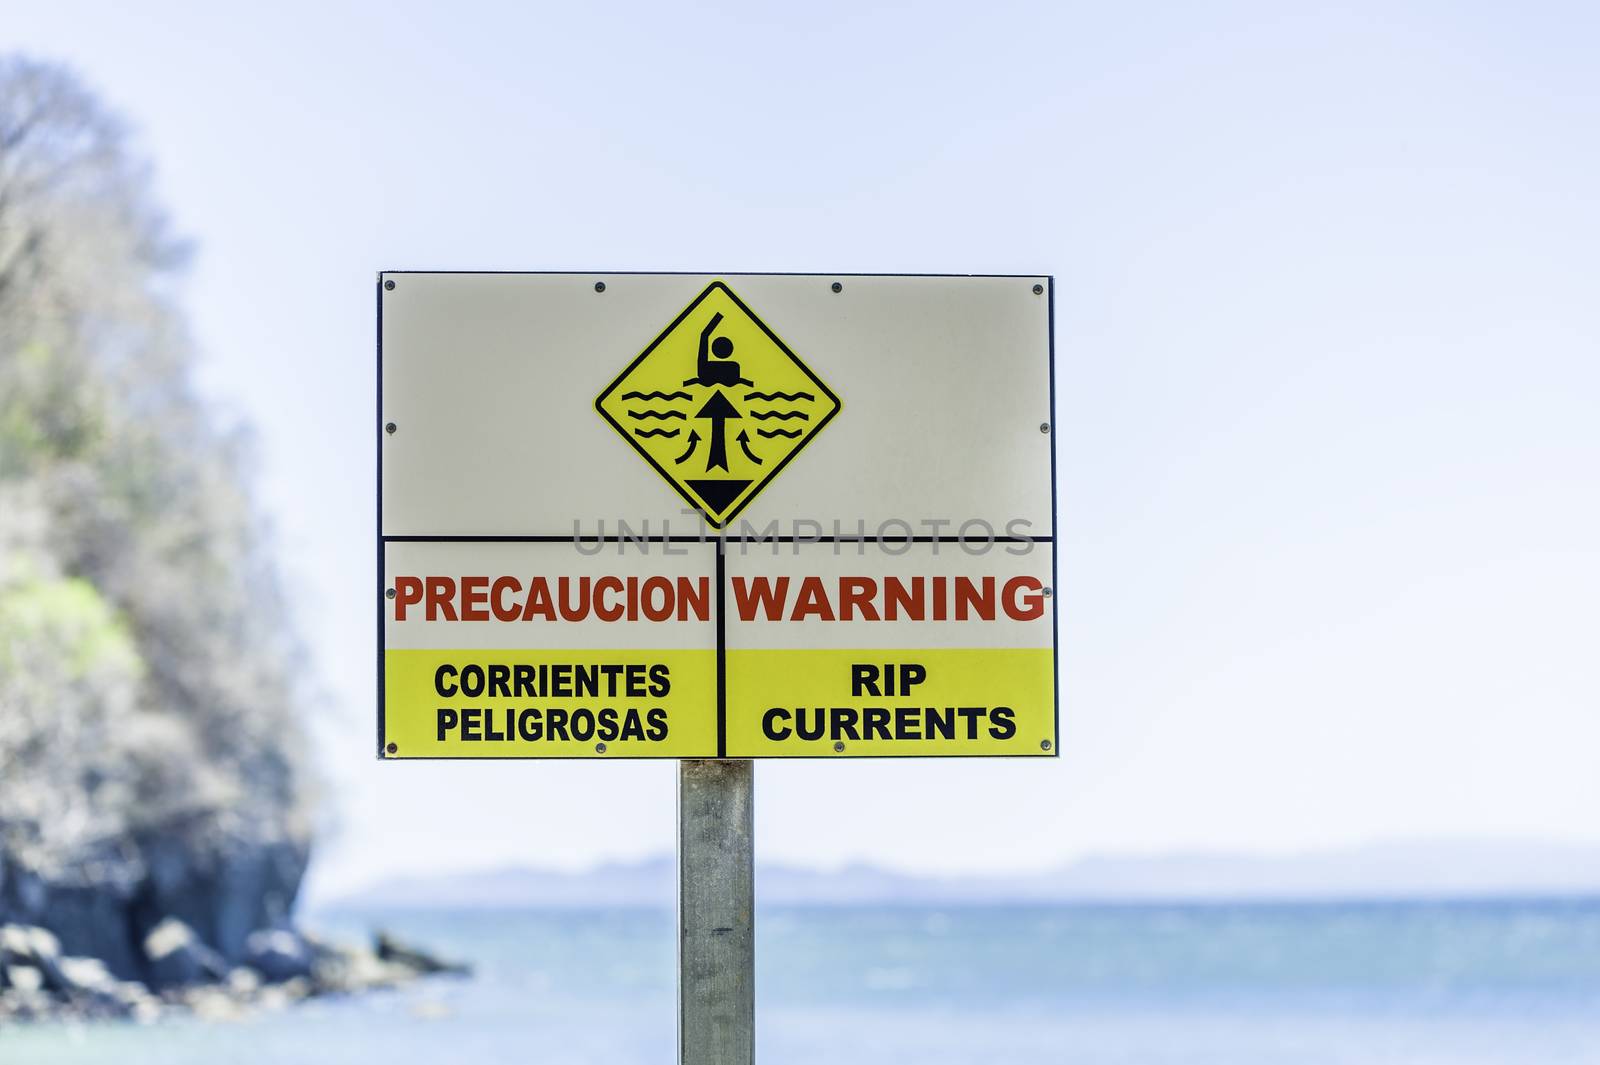 Warning sign for rip currents near an ocean beach.